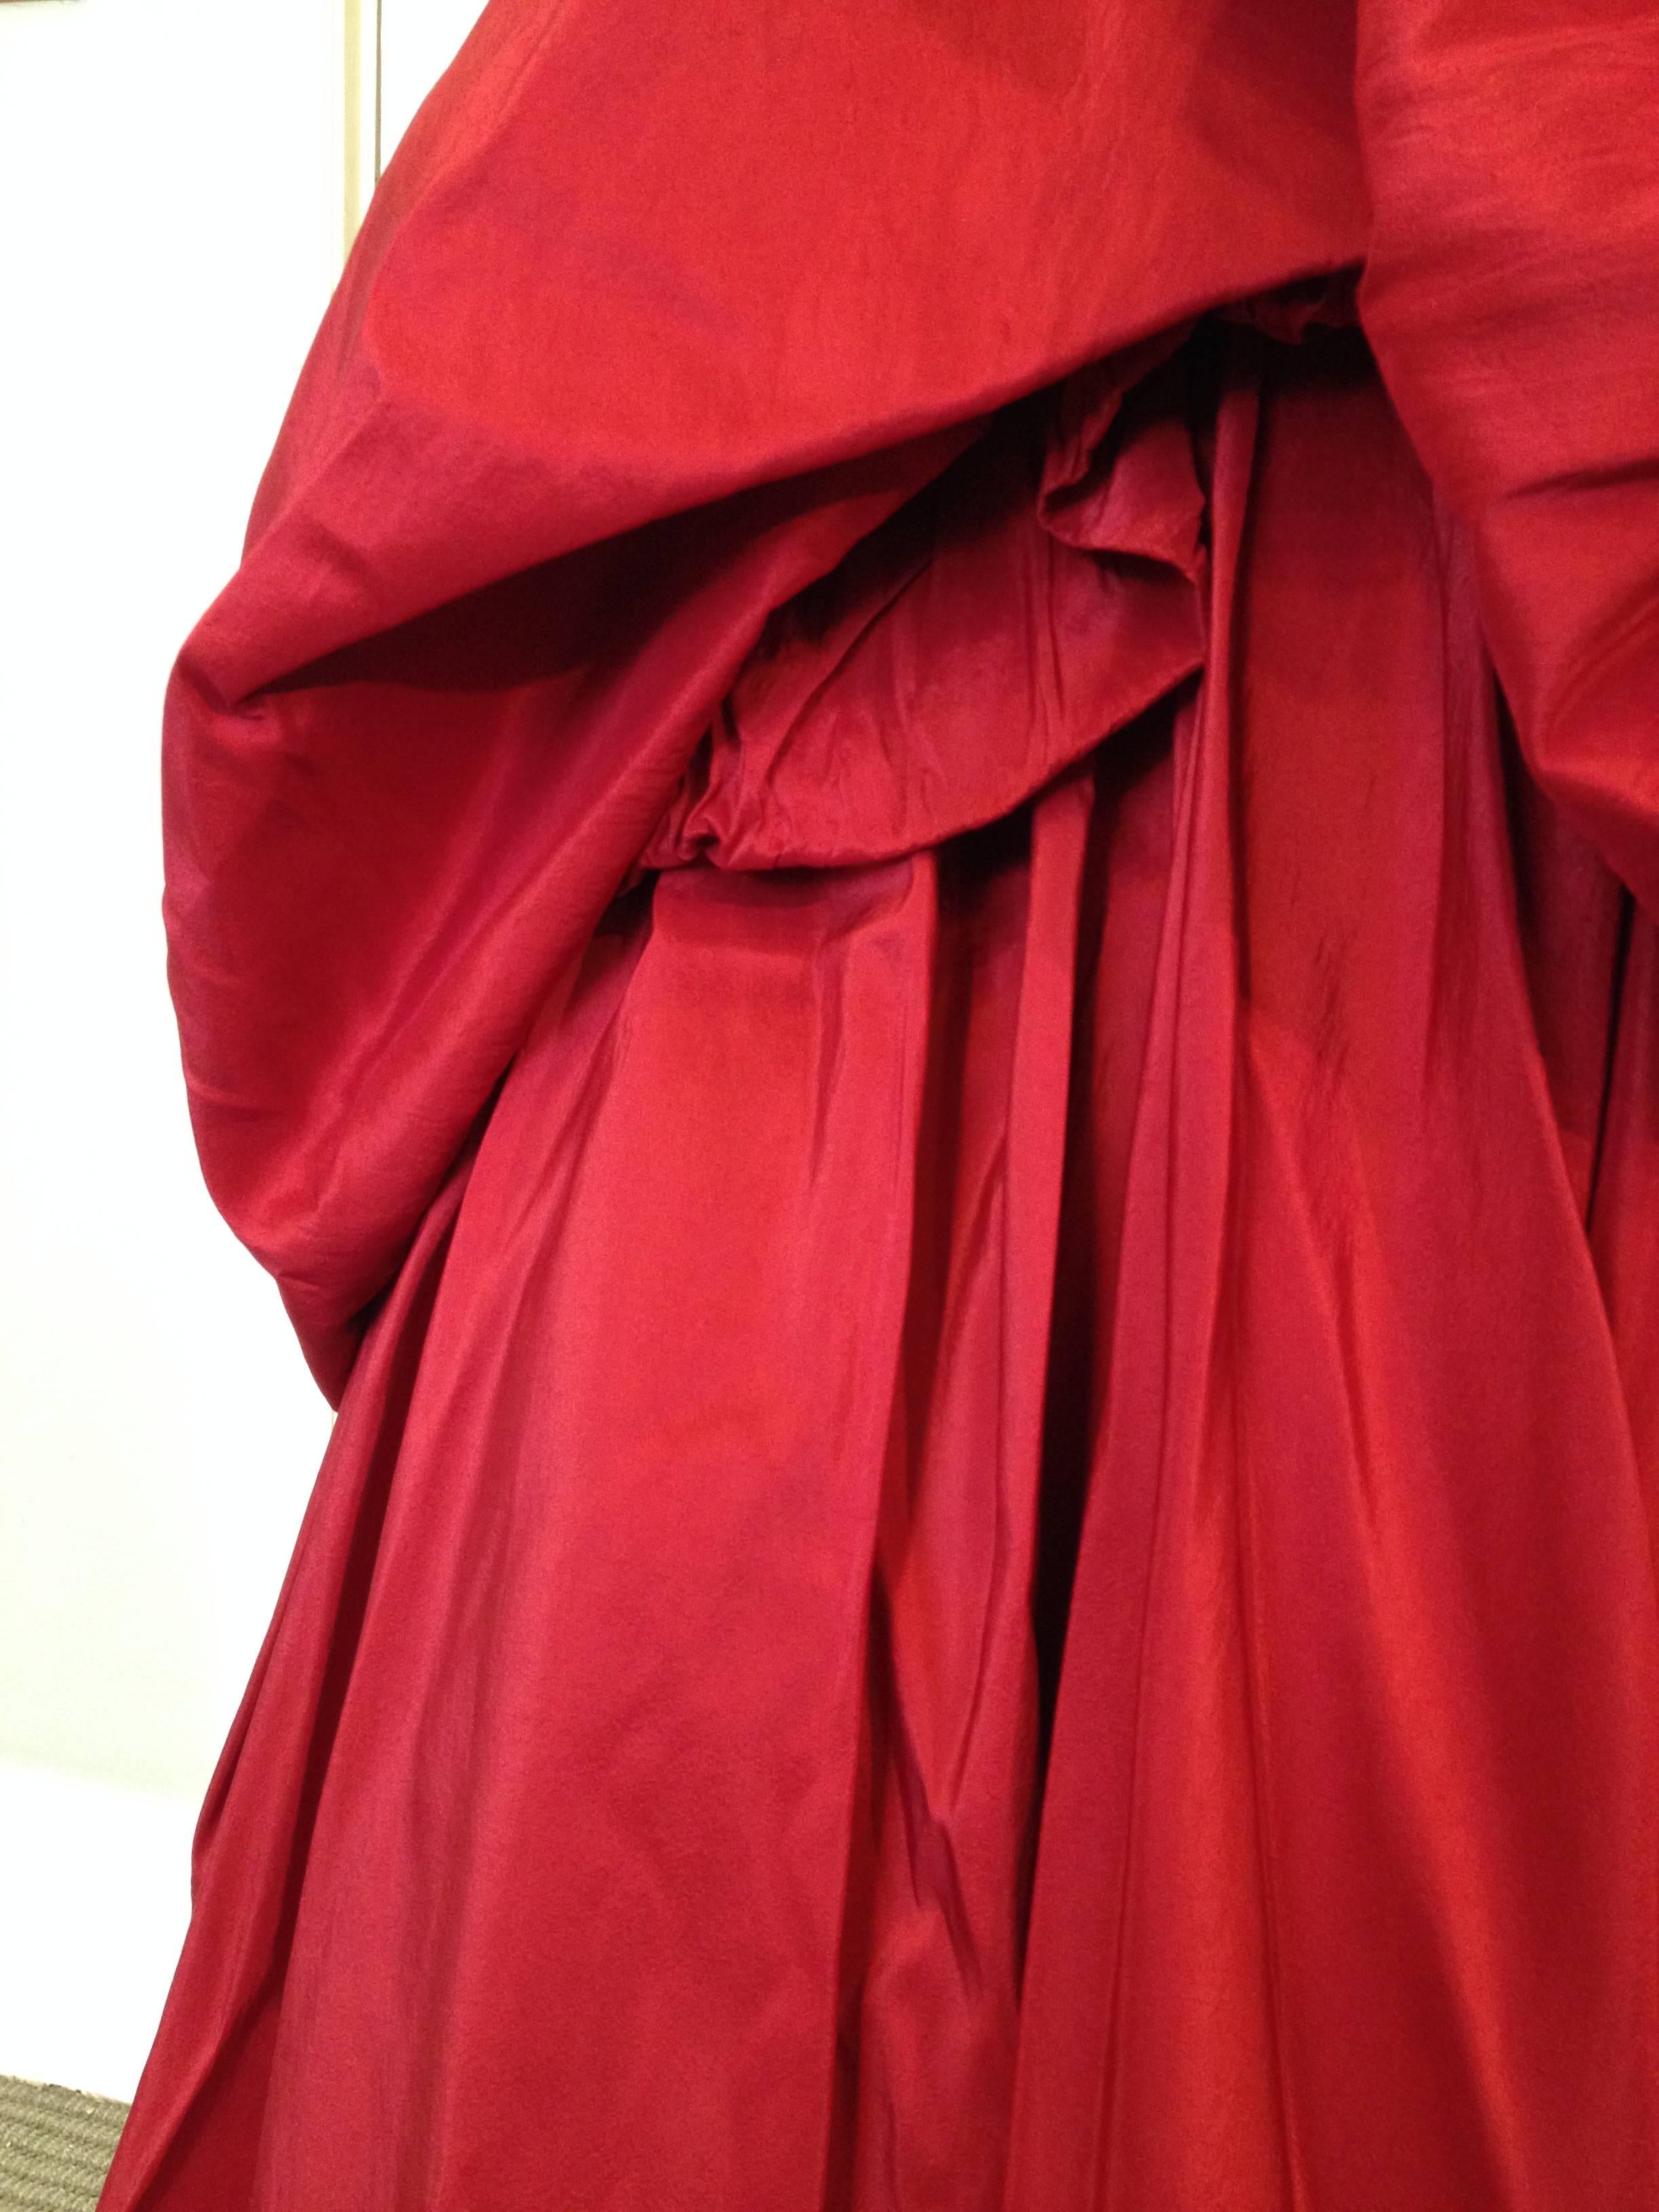 Monique Lhullier Red Silk Ball Gown 2